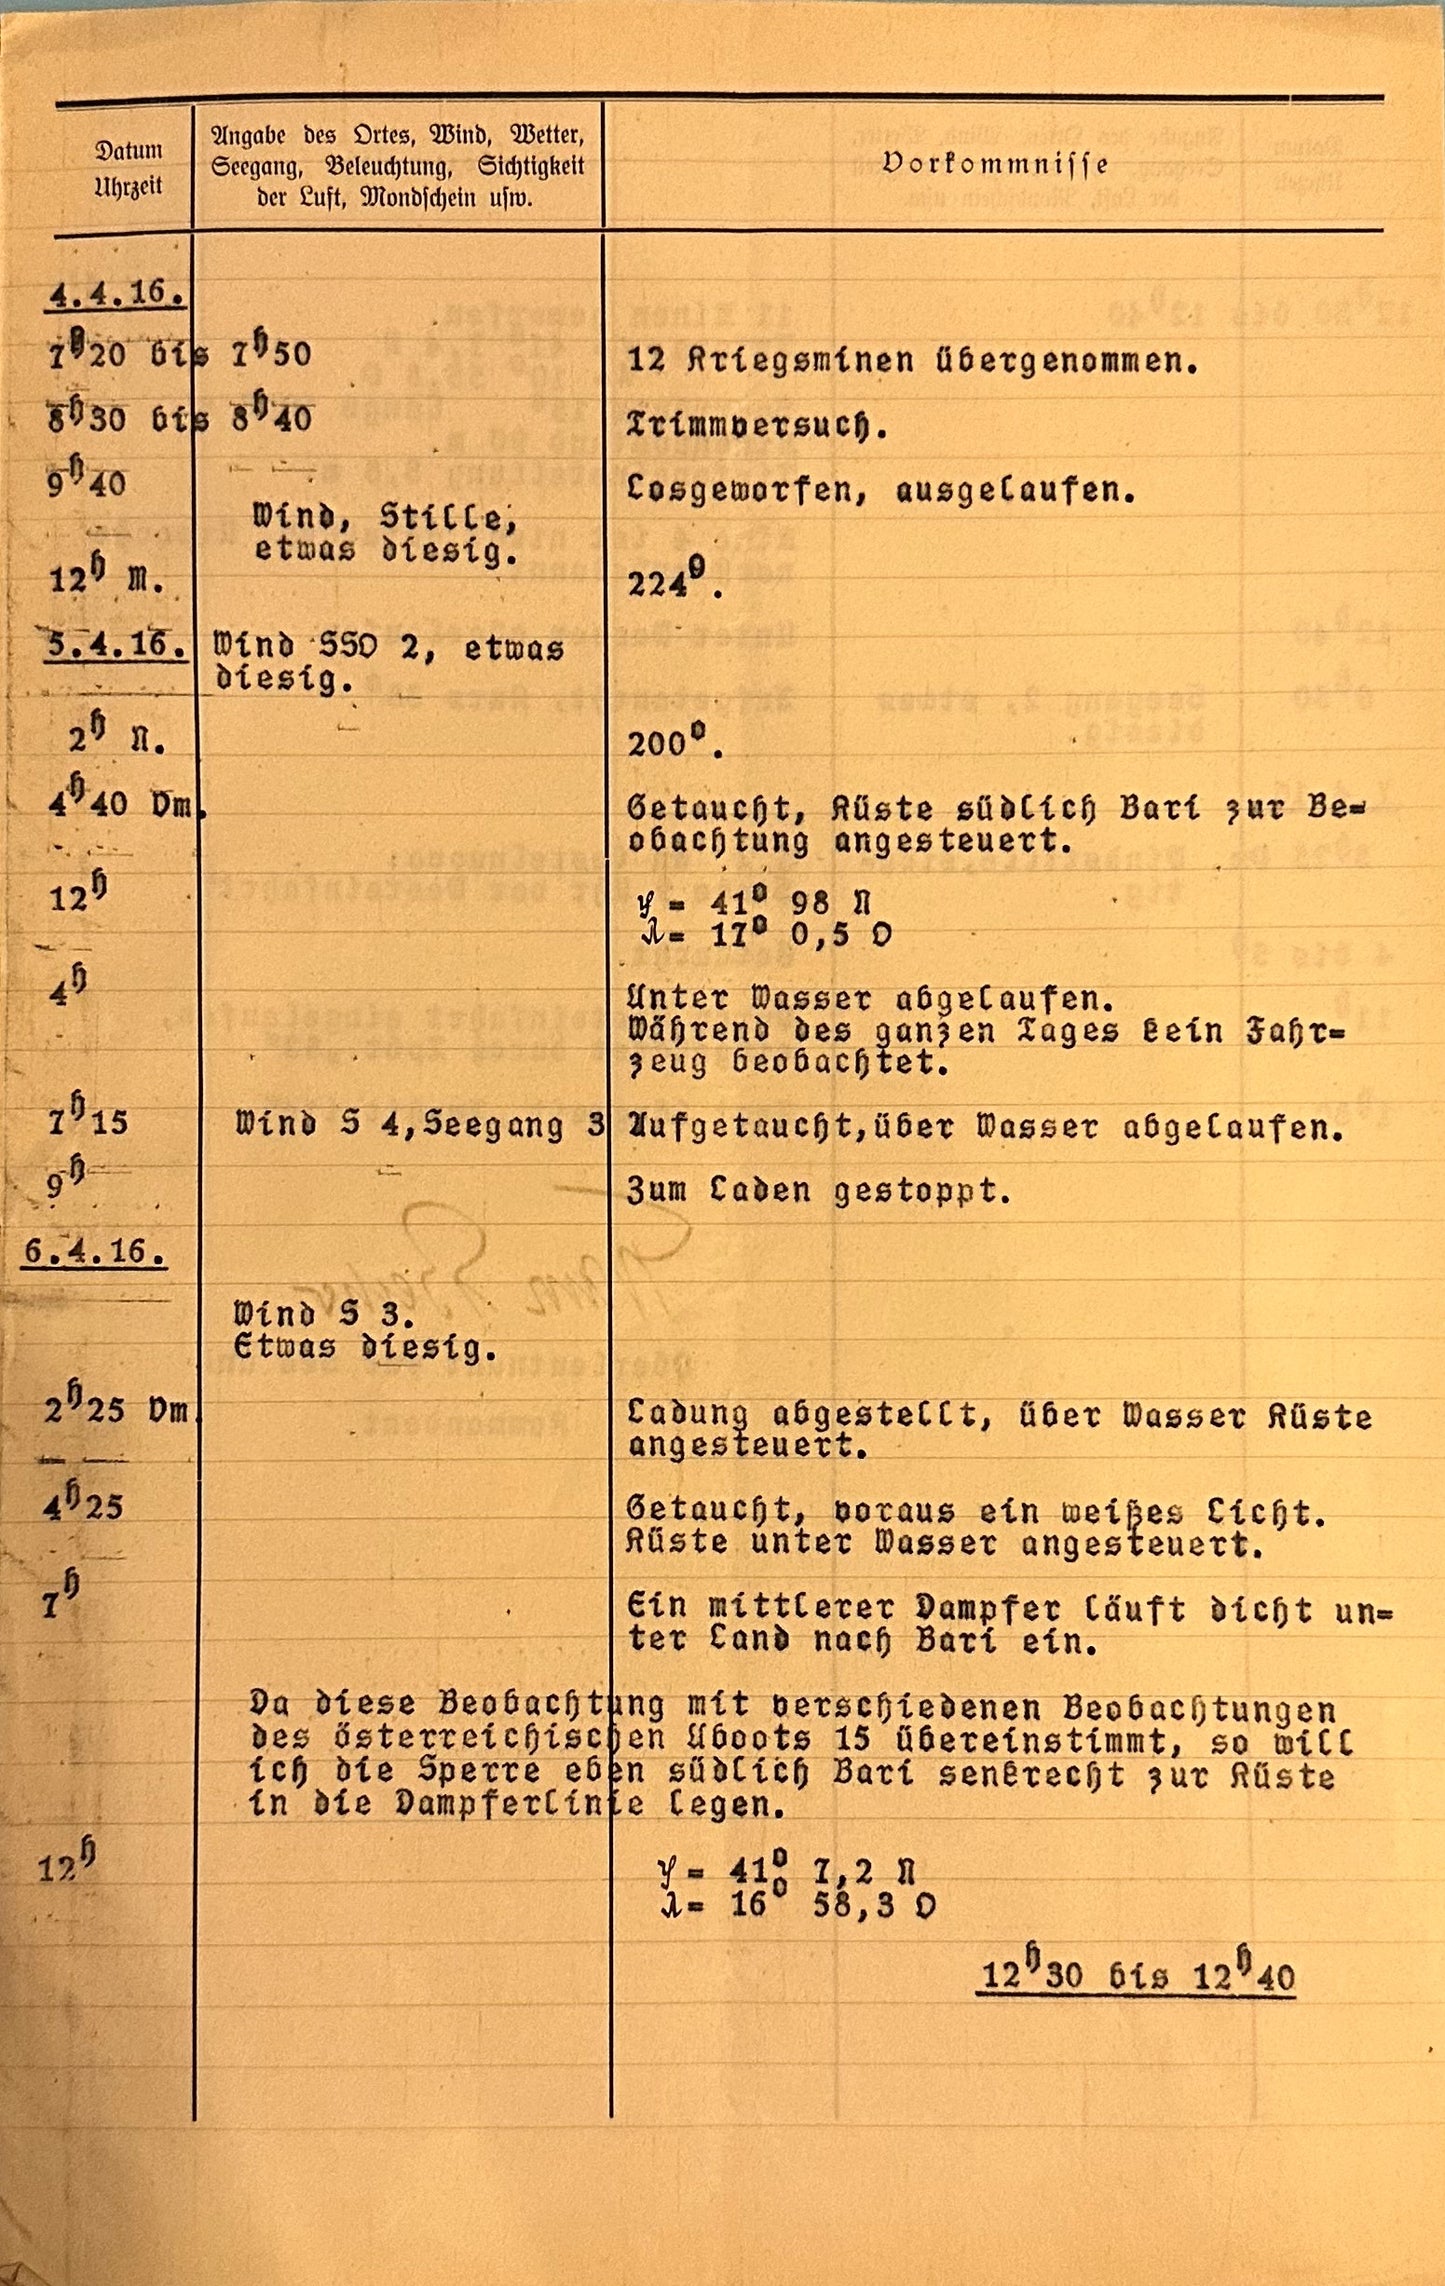 German U Boot UC 14 Kriegstagbuch (WAR DIARY) for Oberleutnant zur See Franz Becker - Derrittmeister Militaria Group